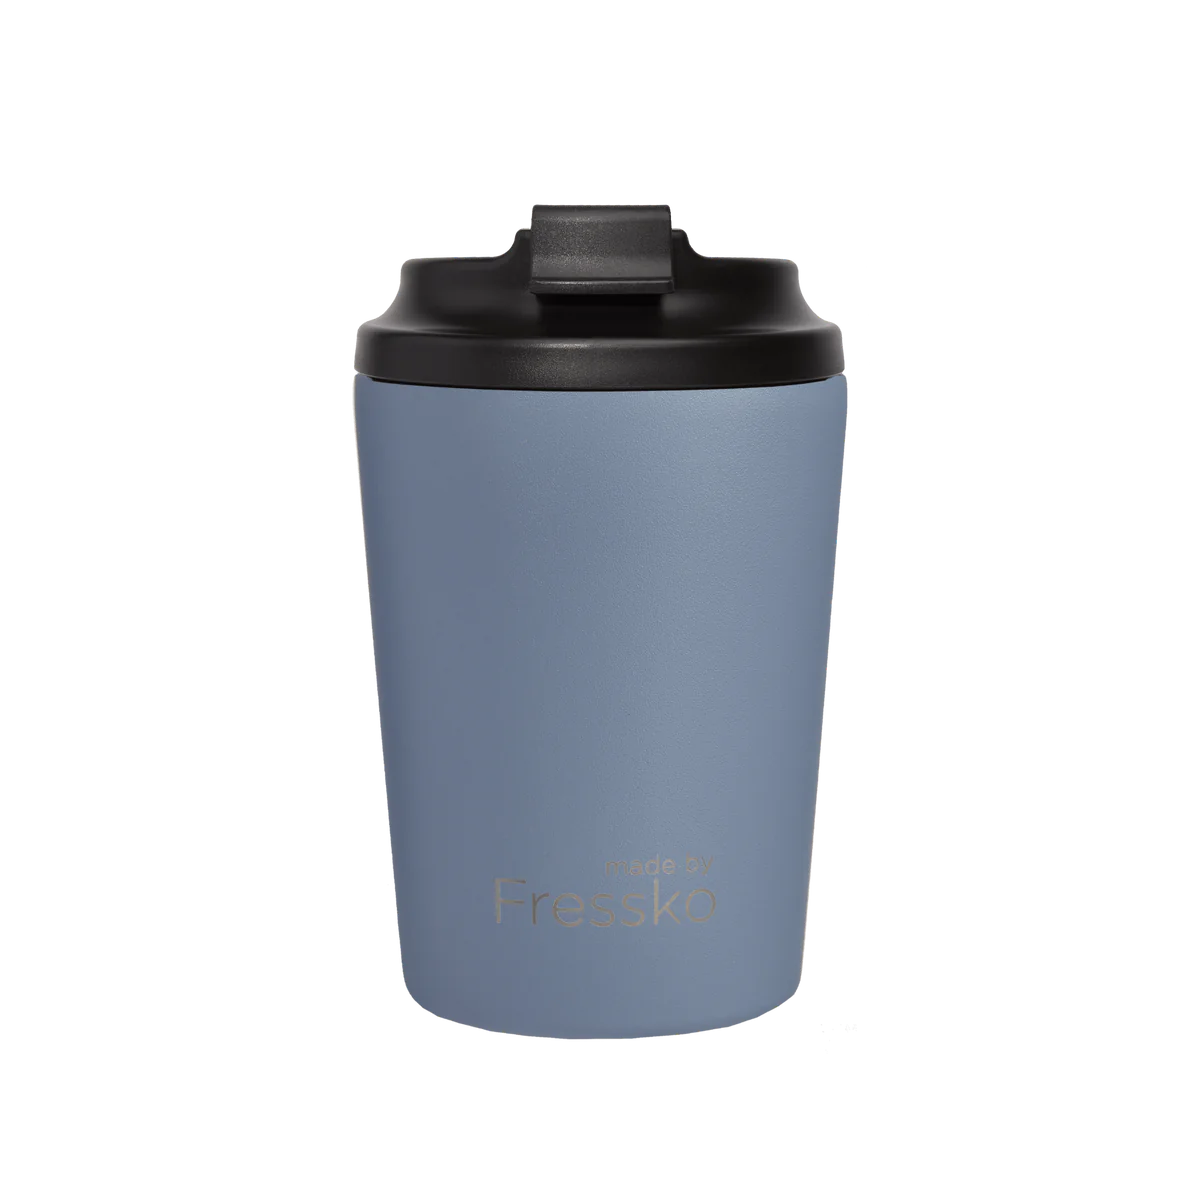 Made by Fressko Reusable Coffee Cup - Bino 8oz